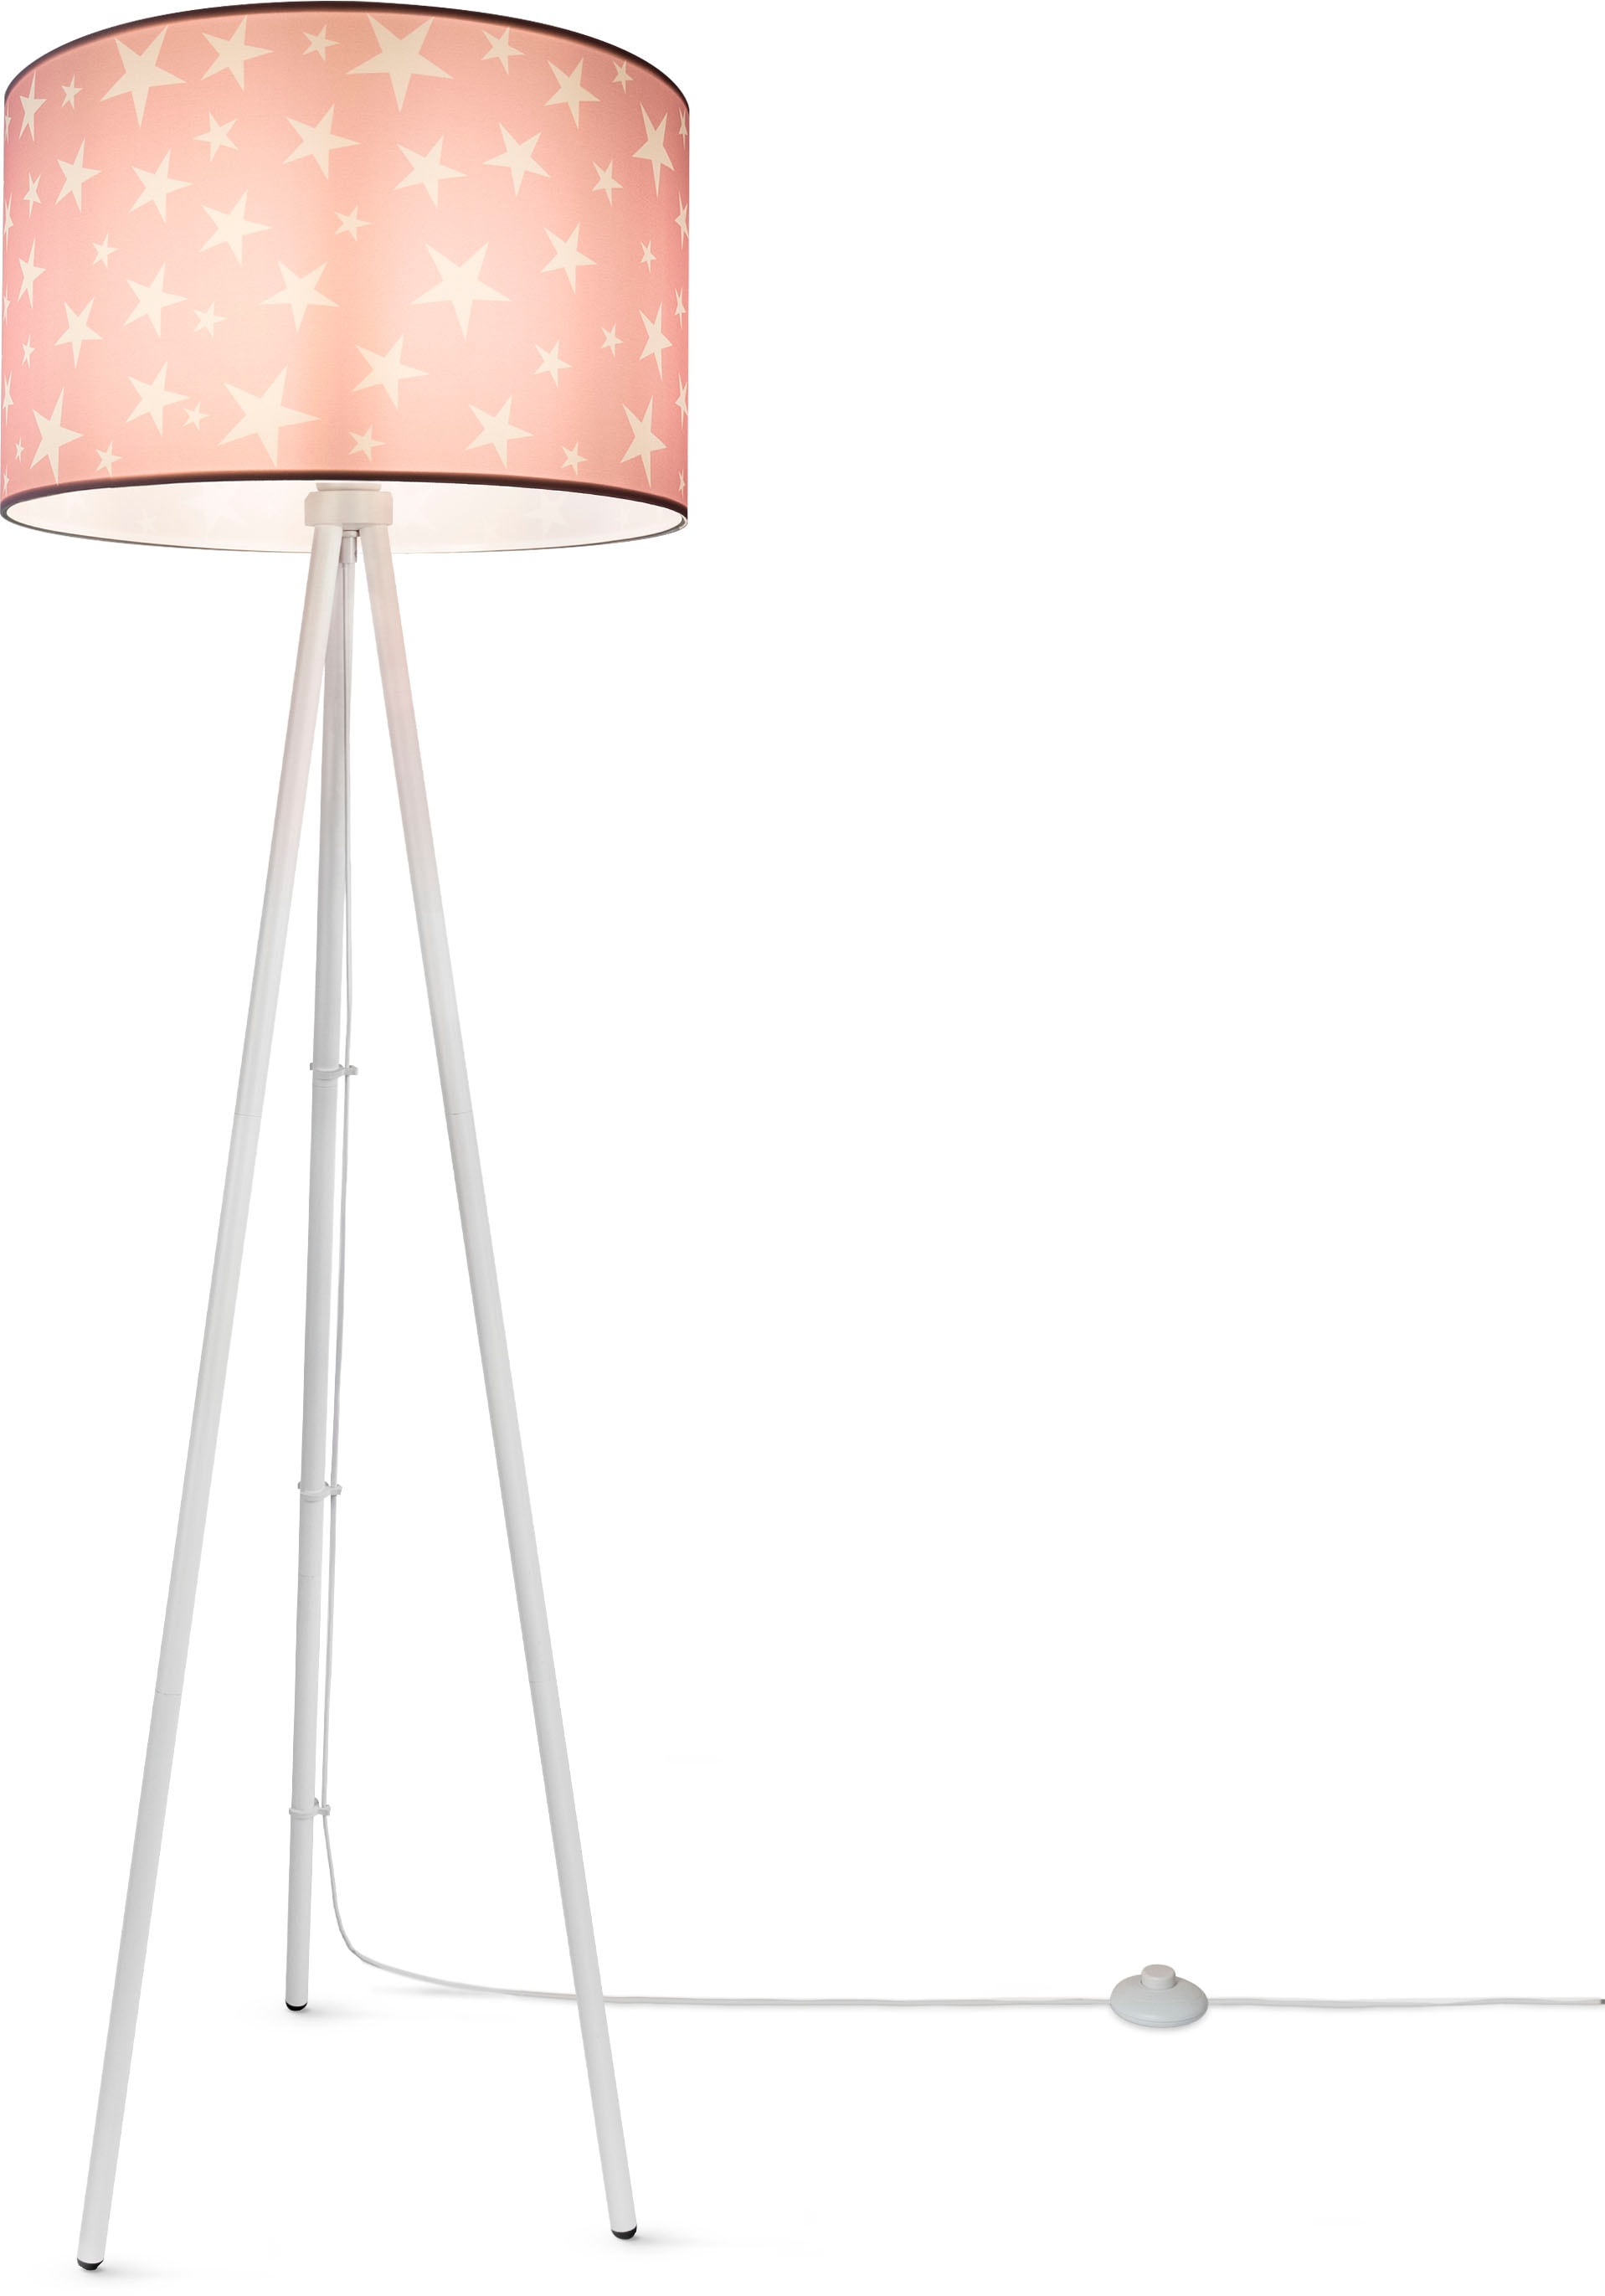 Stehlampe günstig Kinderlampe »Trina Capri«, BAUR | Deko Paco kaufen Stehleuchte Kinderzimmer, Home Sternen-Motiv, LED E27